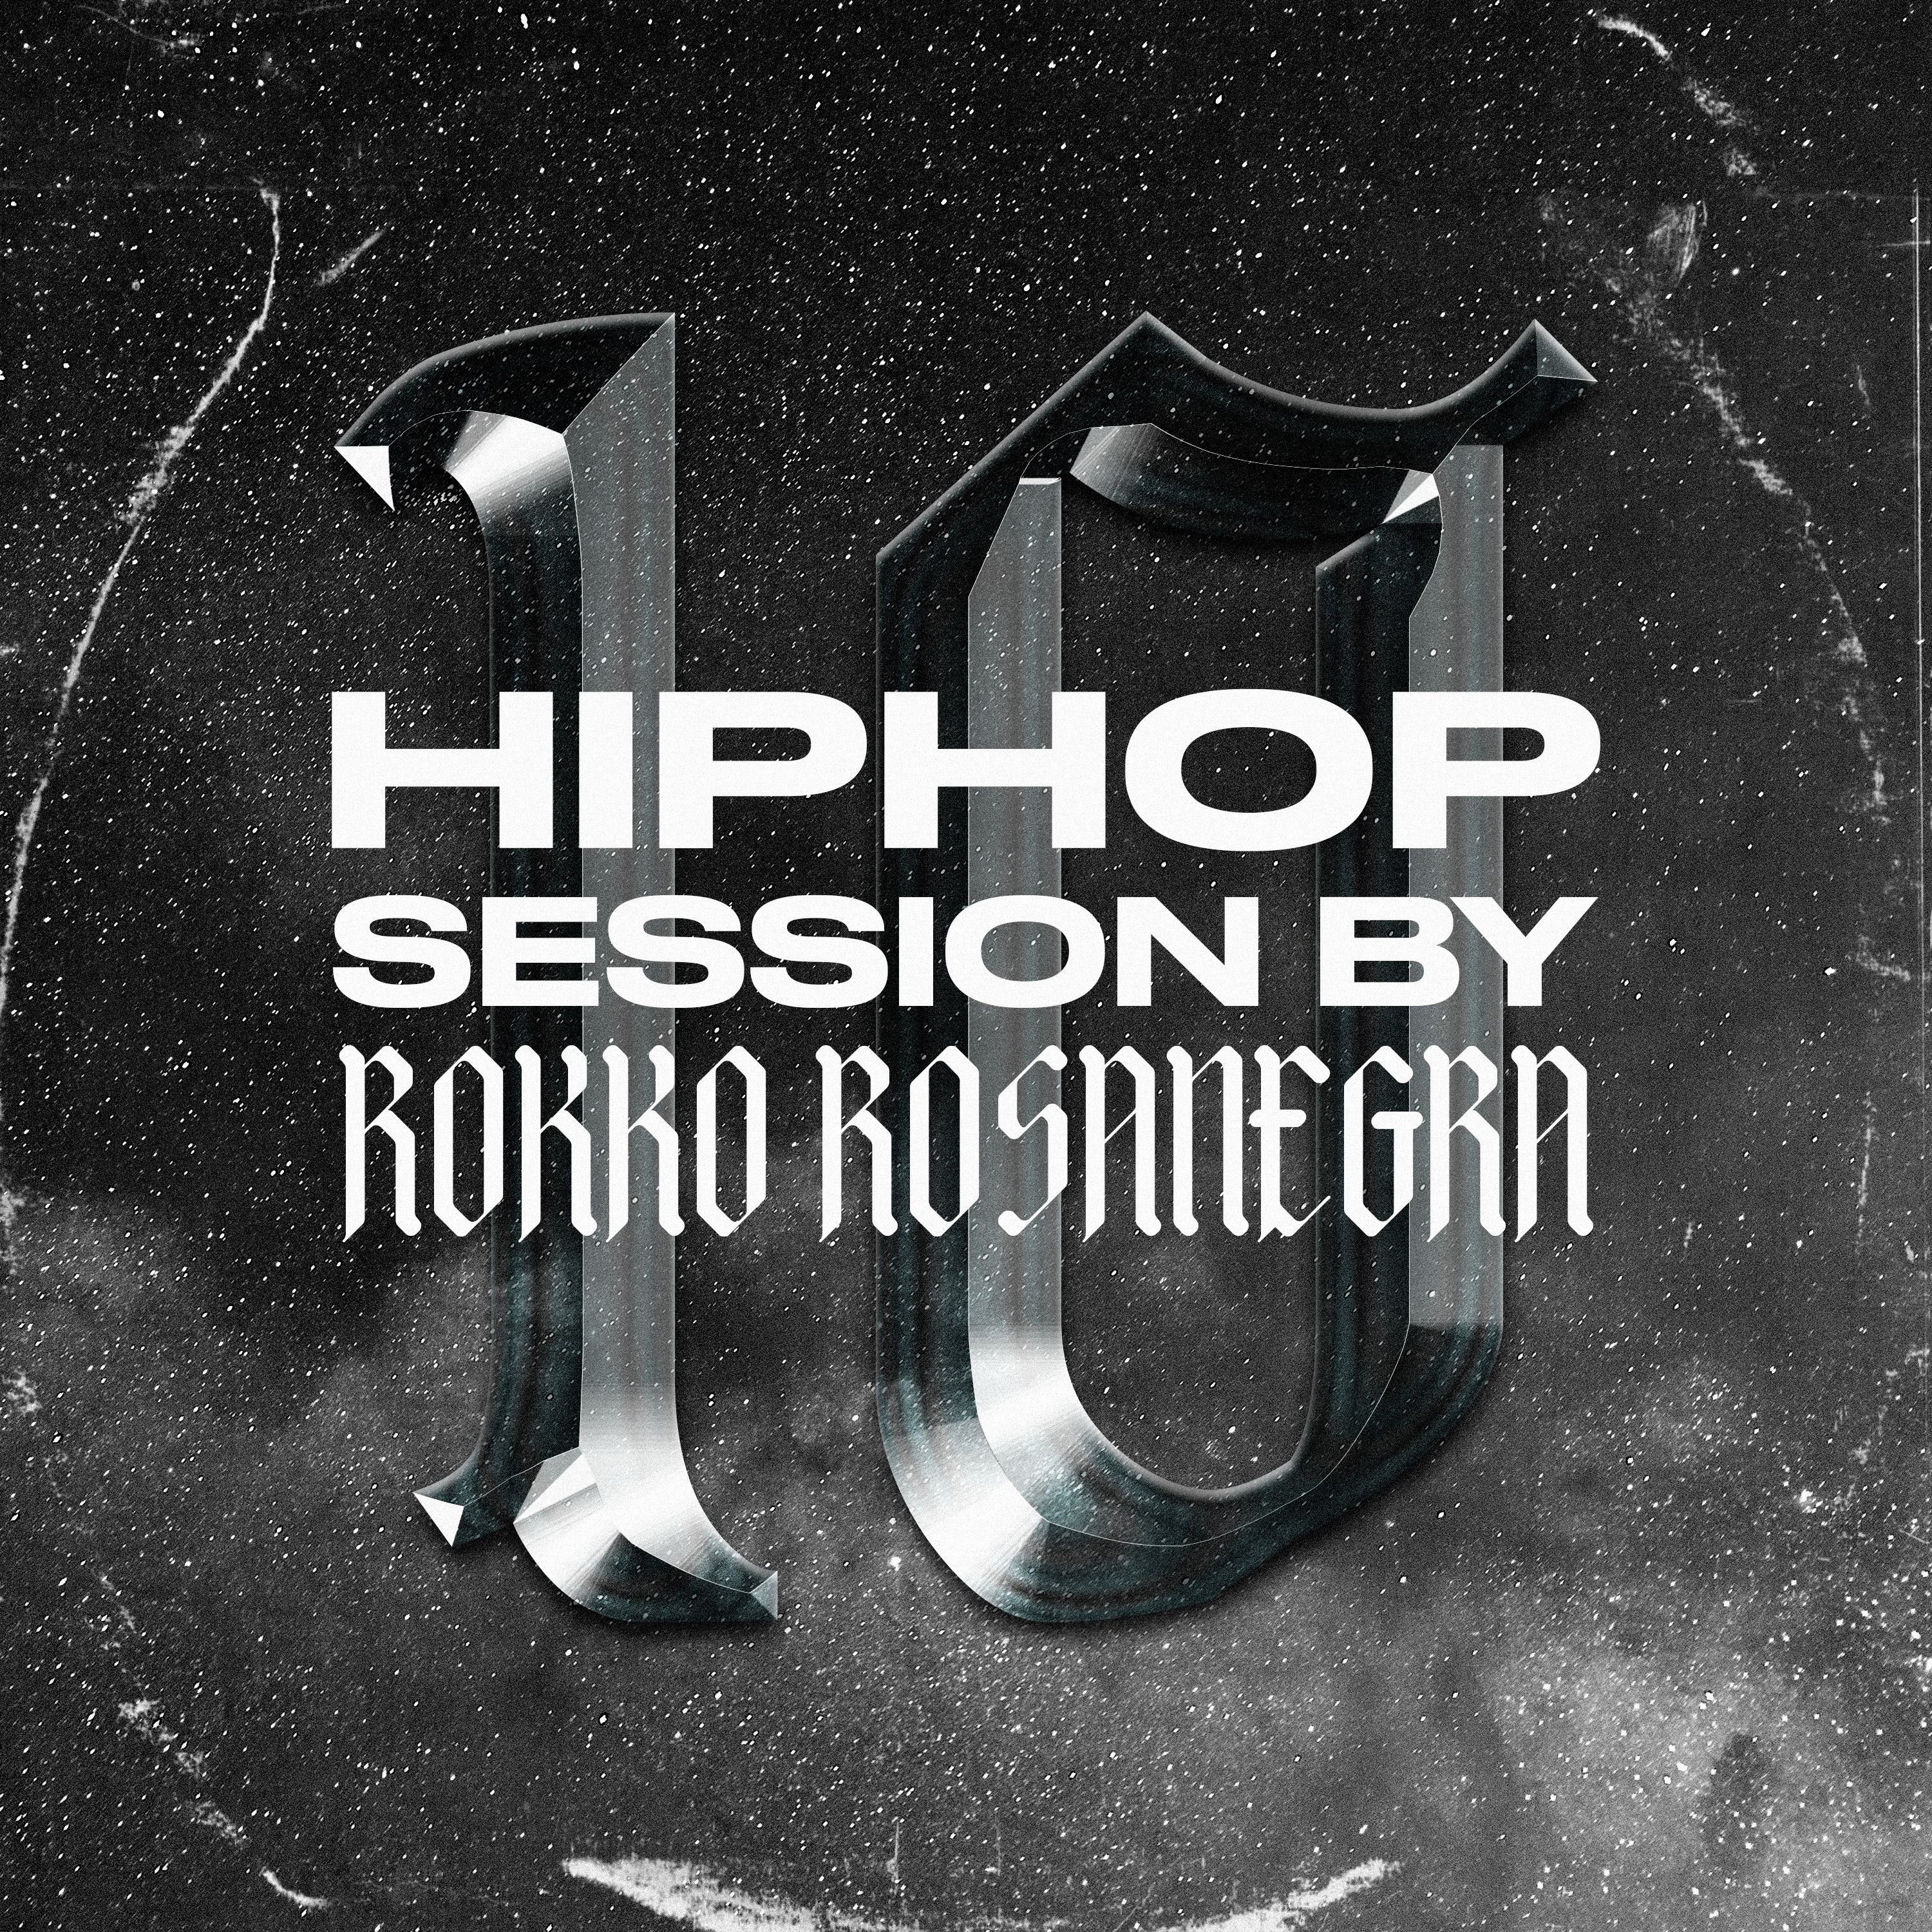 Download HIP HOP SESSION 10 (DJ ROKKO ROSANEGRA)